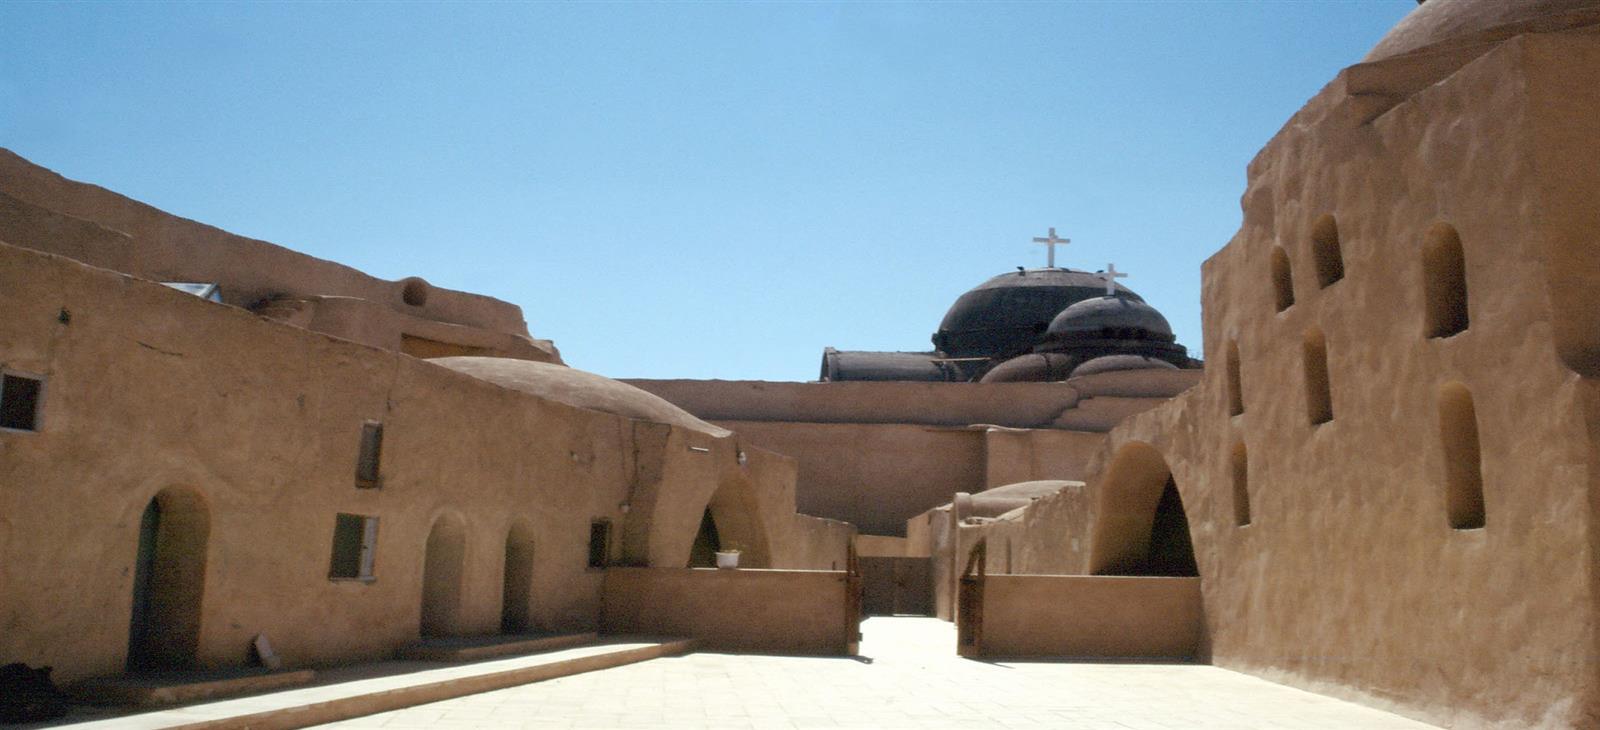 Wadi El Natrun Monastery